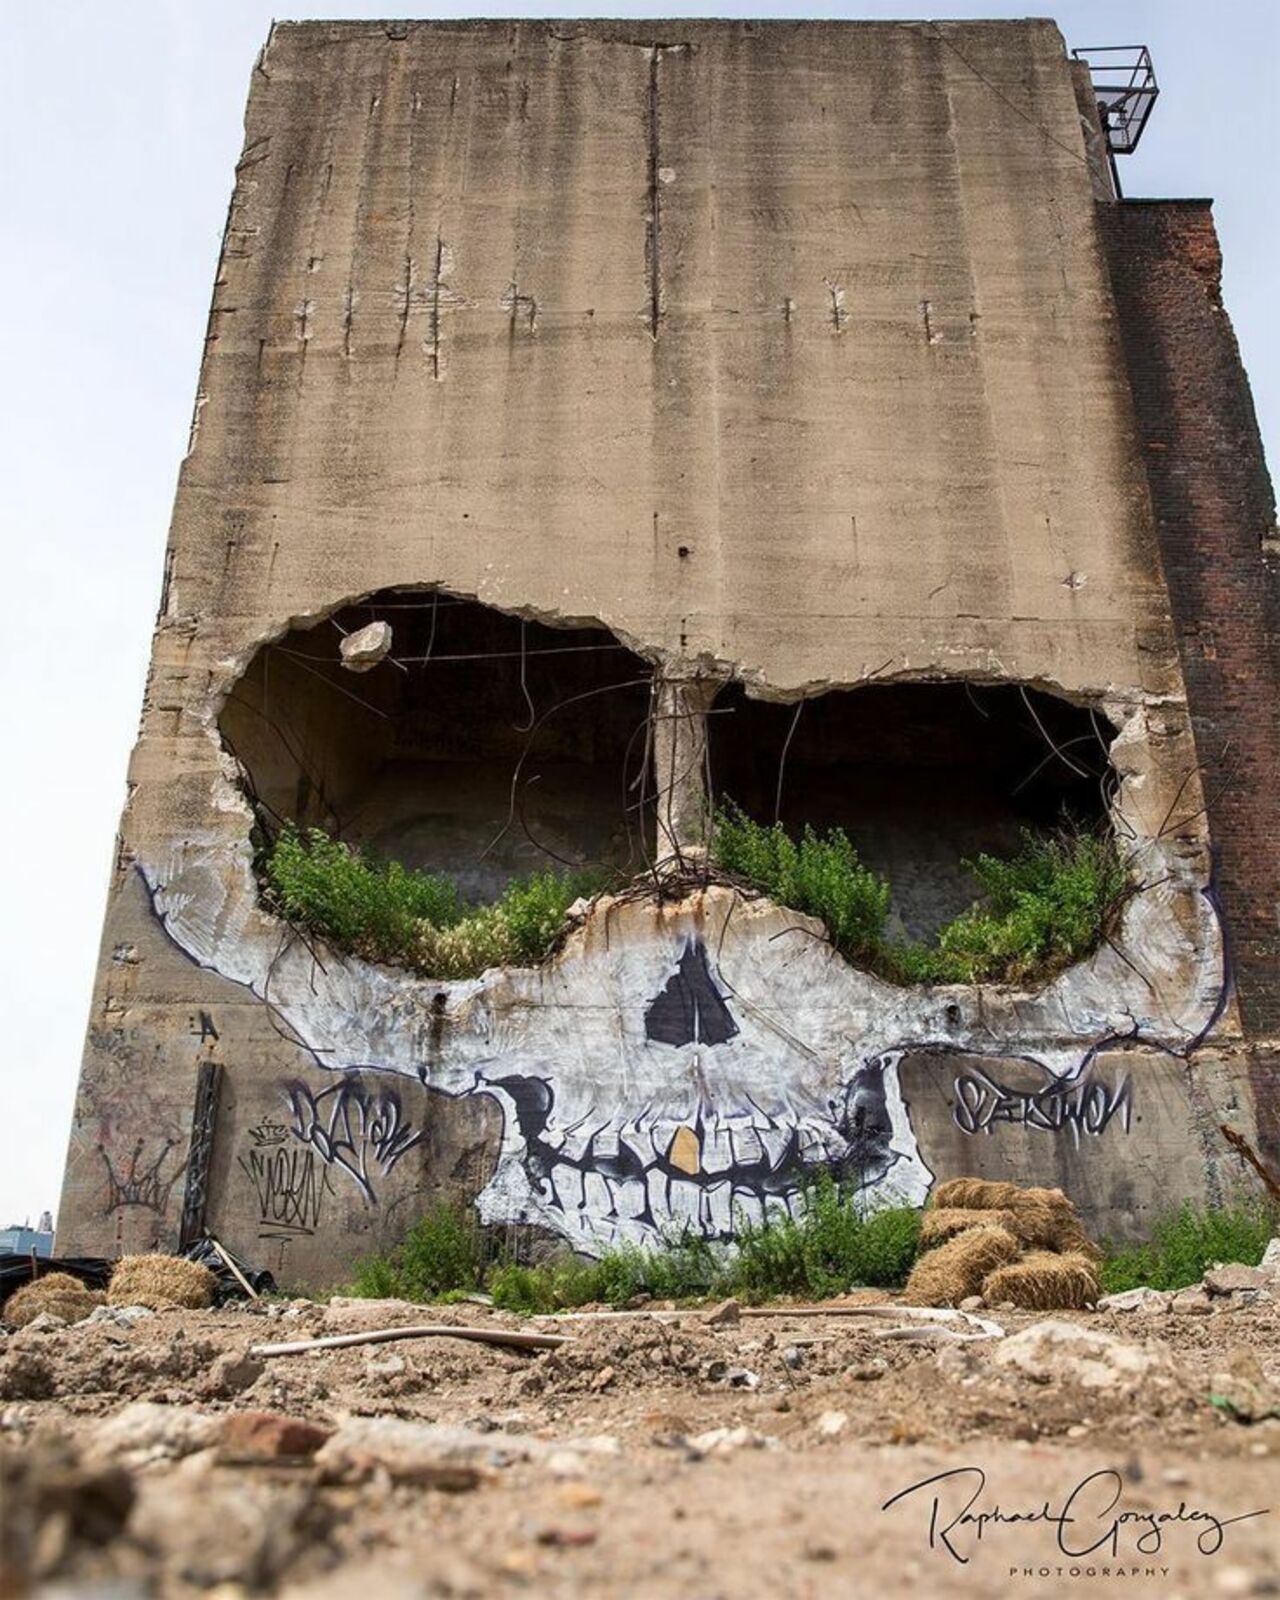 IDK the artist but this is dope af#streetart #mural #graffiti #art https://t.co/MUx7GIVTap